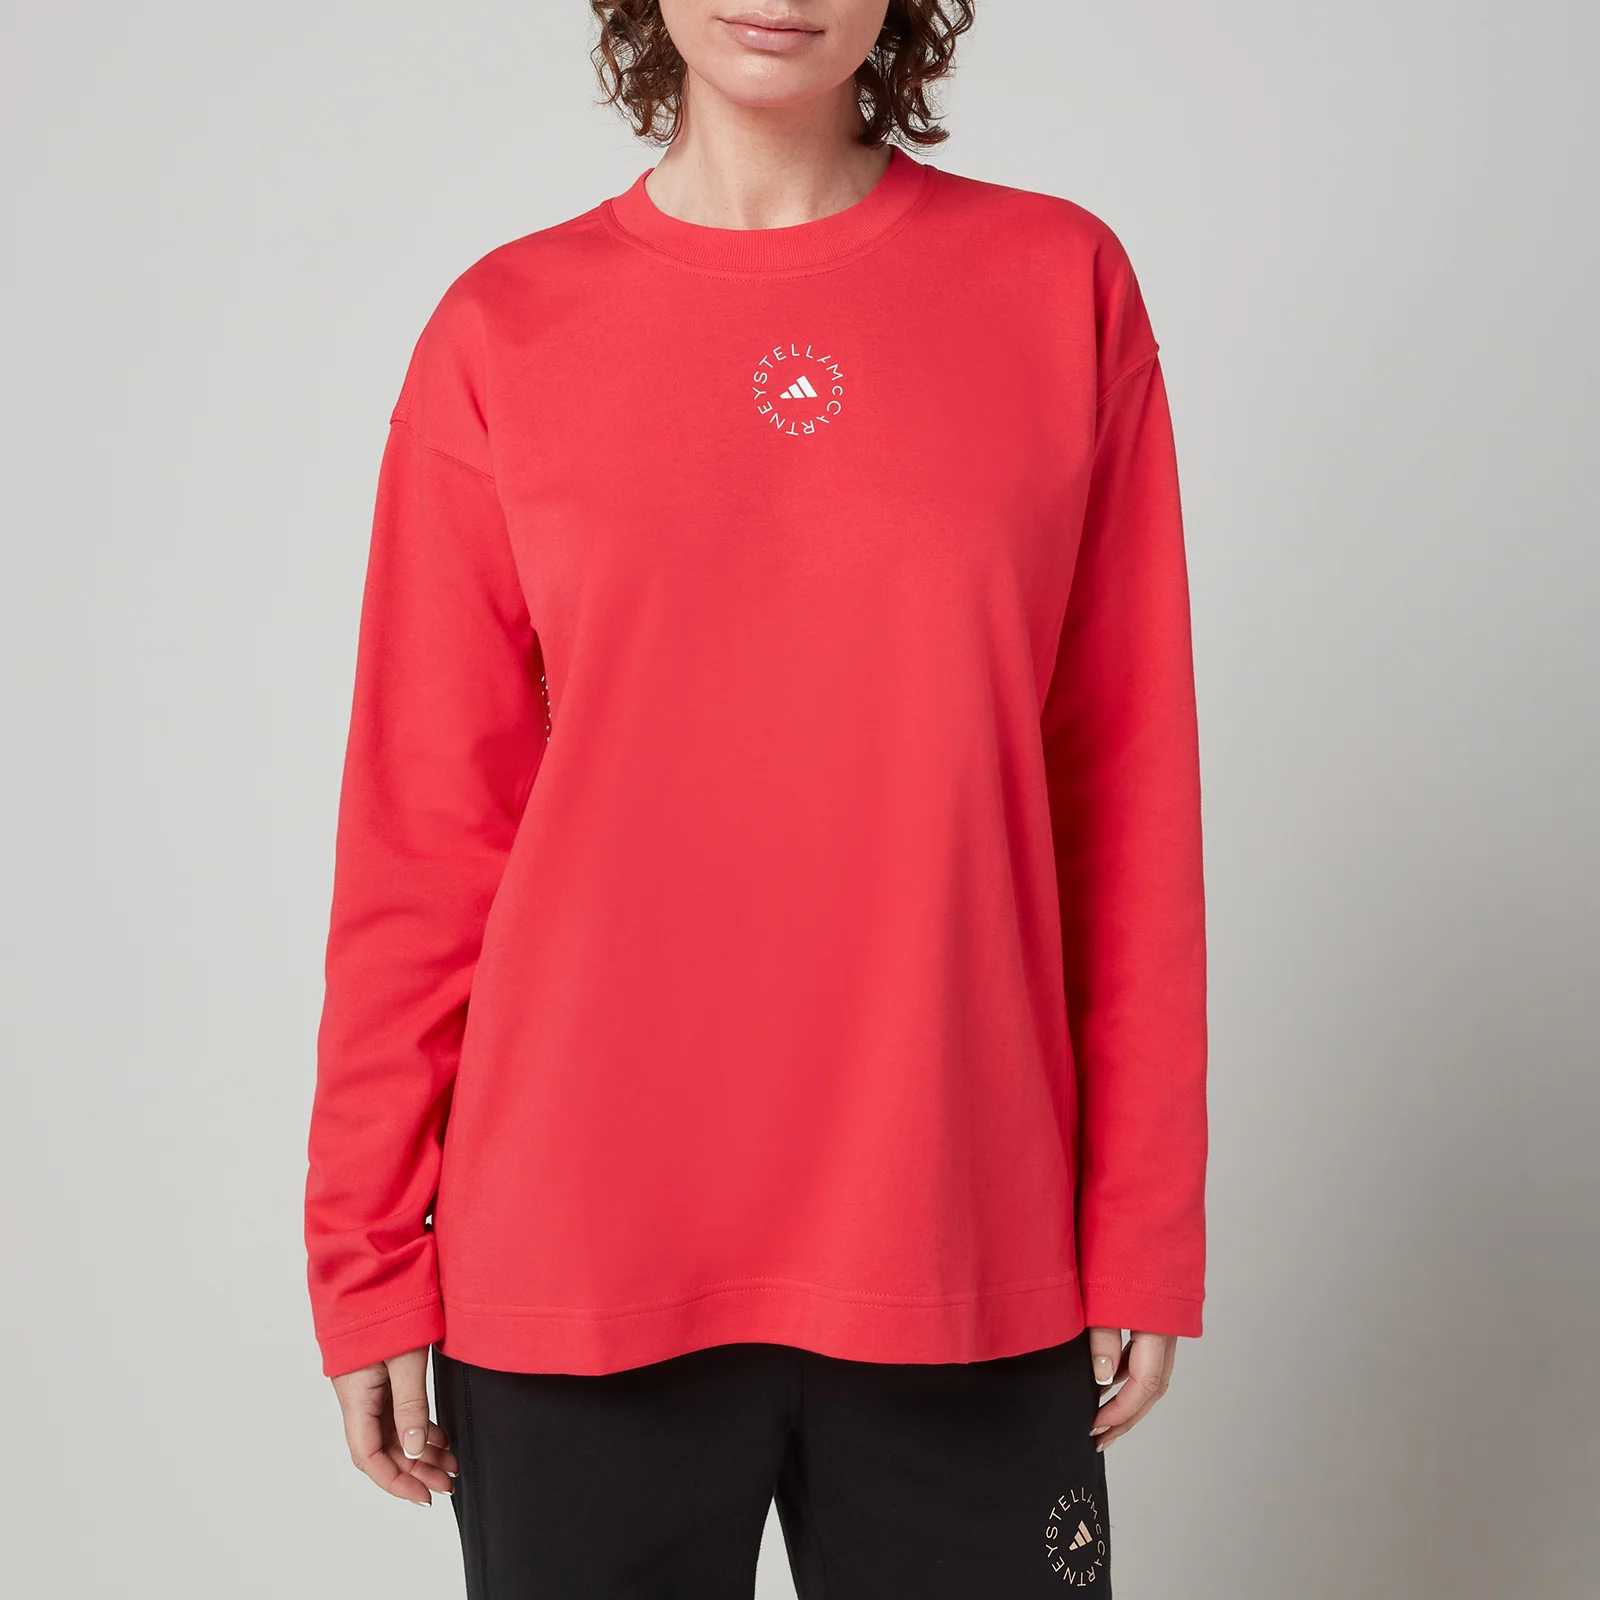 adidas by Stella McCartney Women's Asmc C Ls T-Shirt - Actpnk Image 1